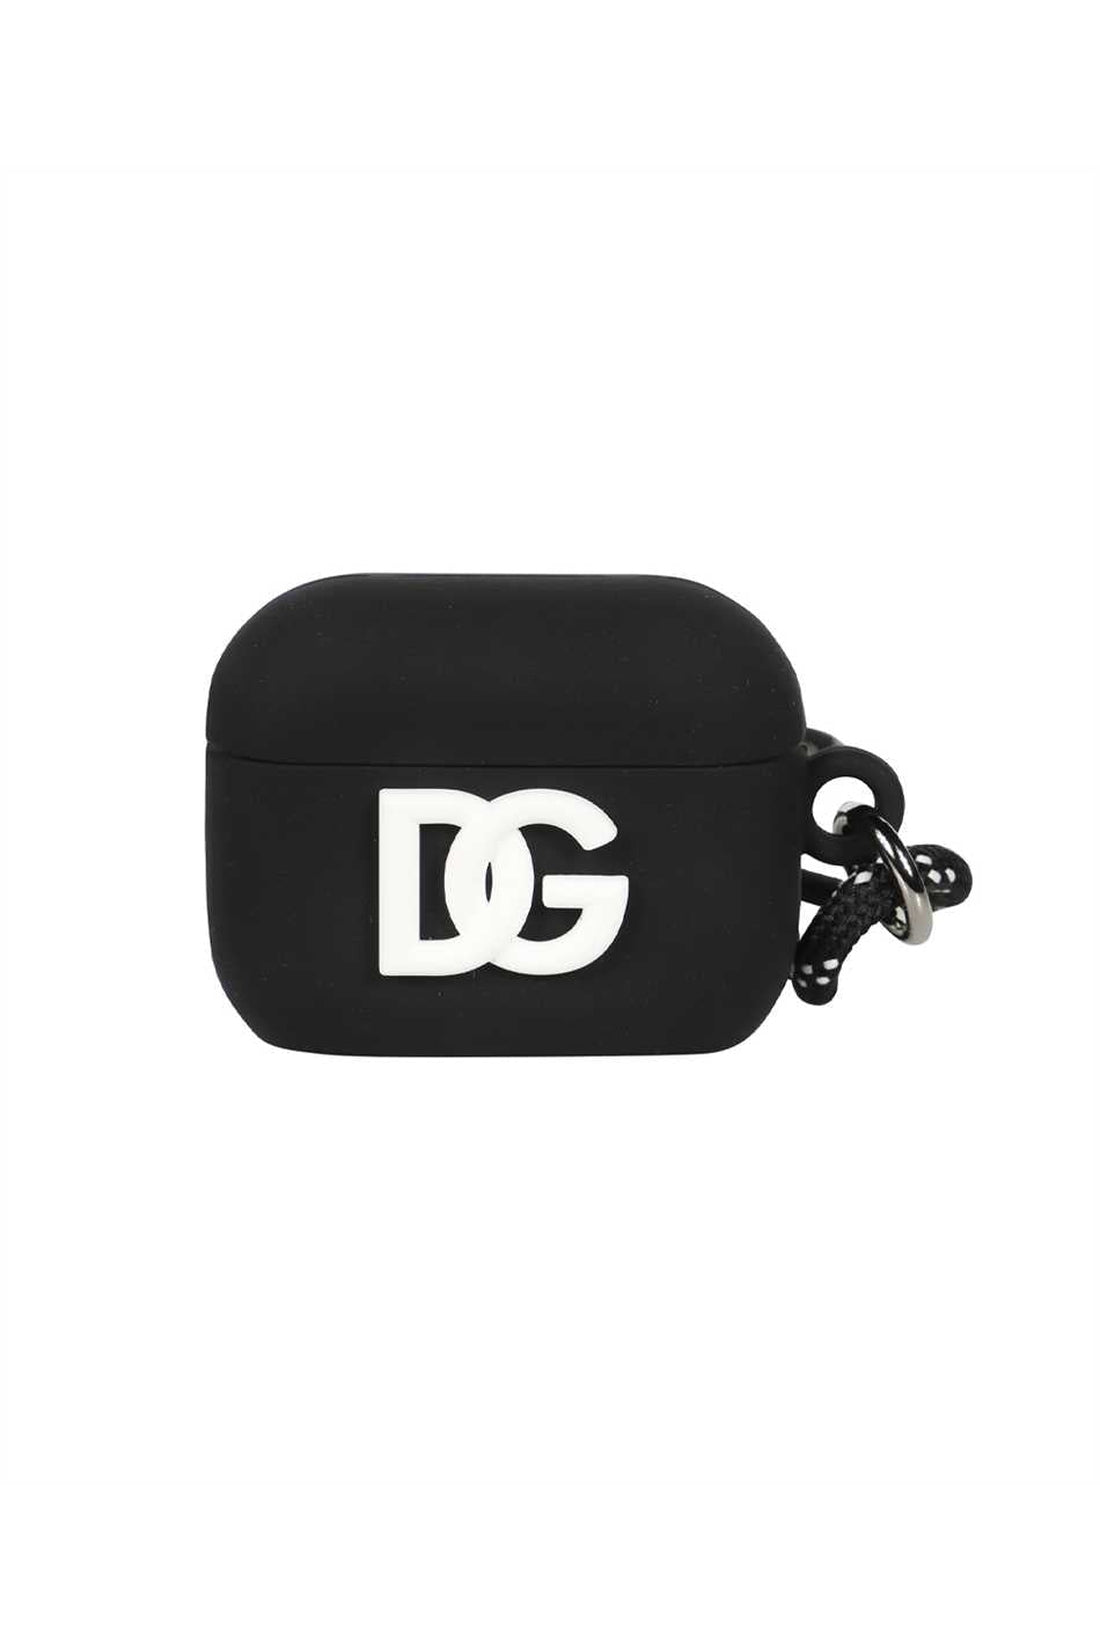 Dolce & Gabbana-OUTLET-SALE-AirPods rubber case-ARCHIVIST